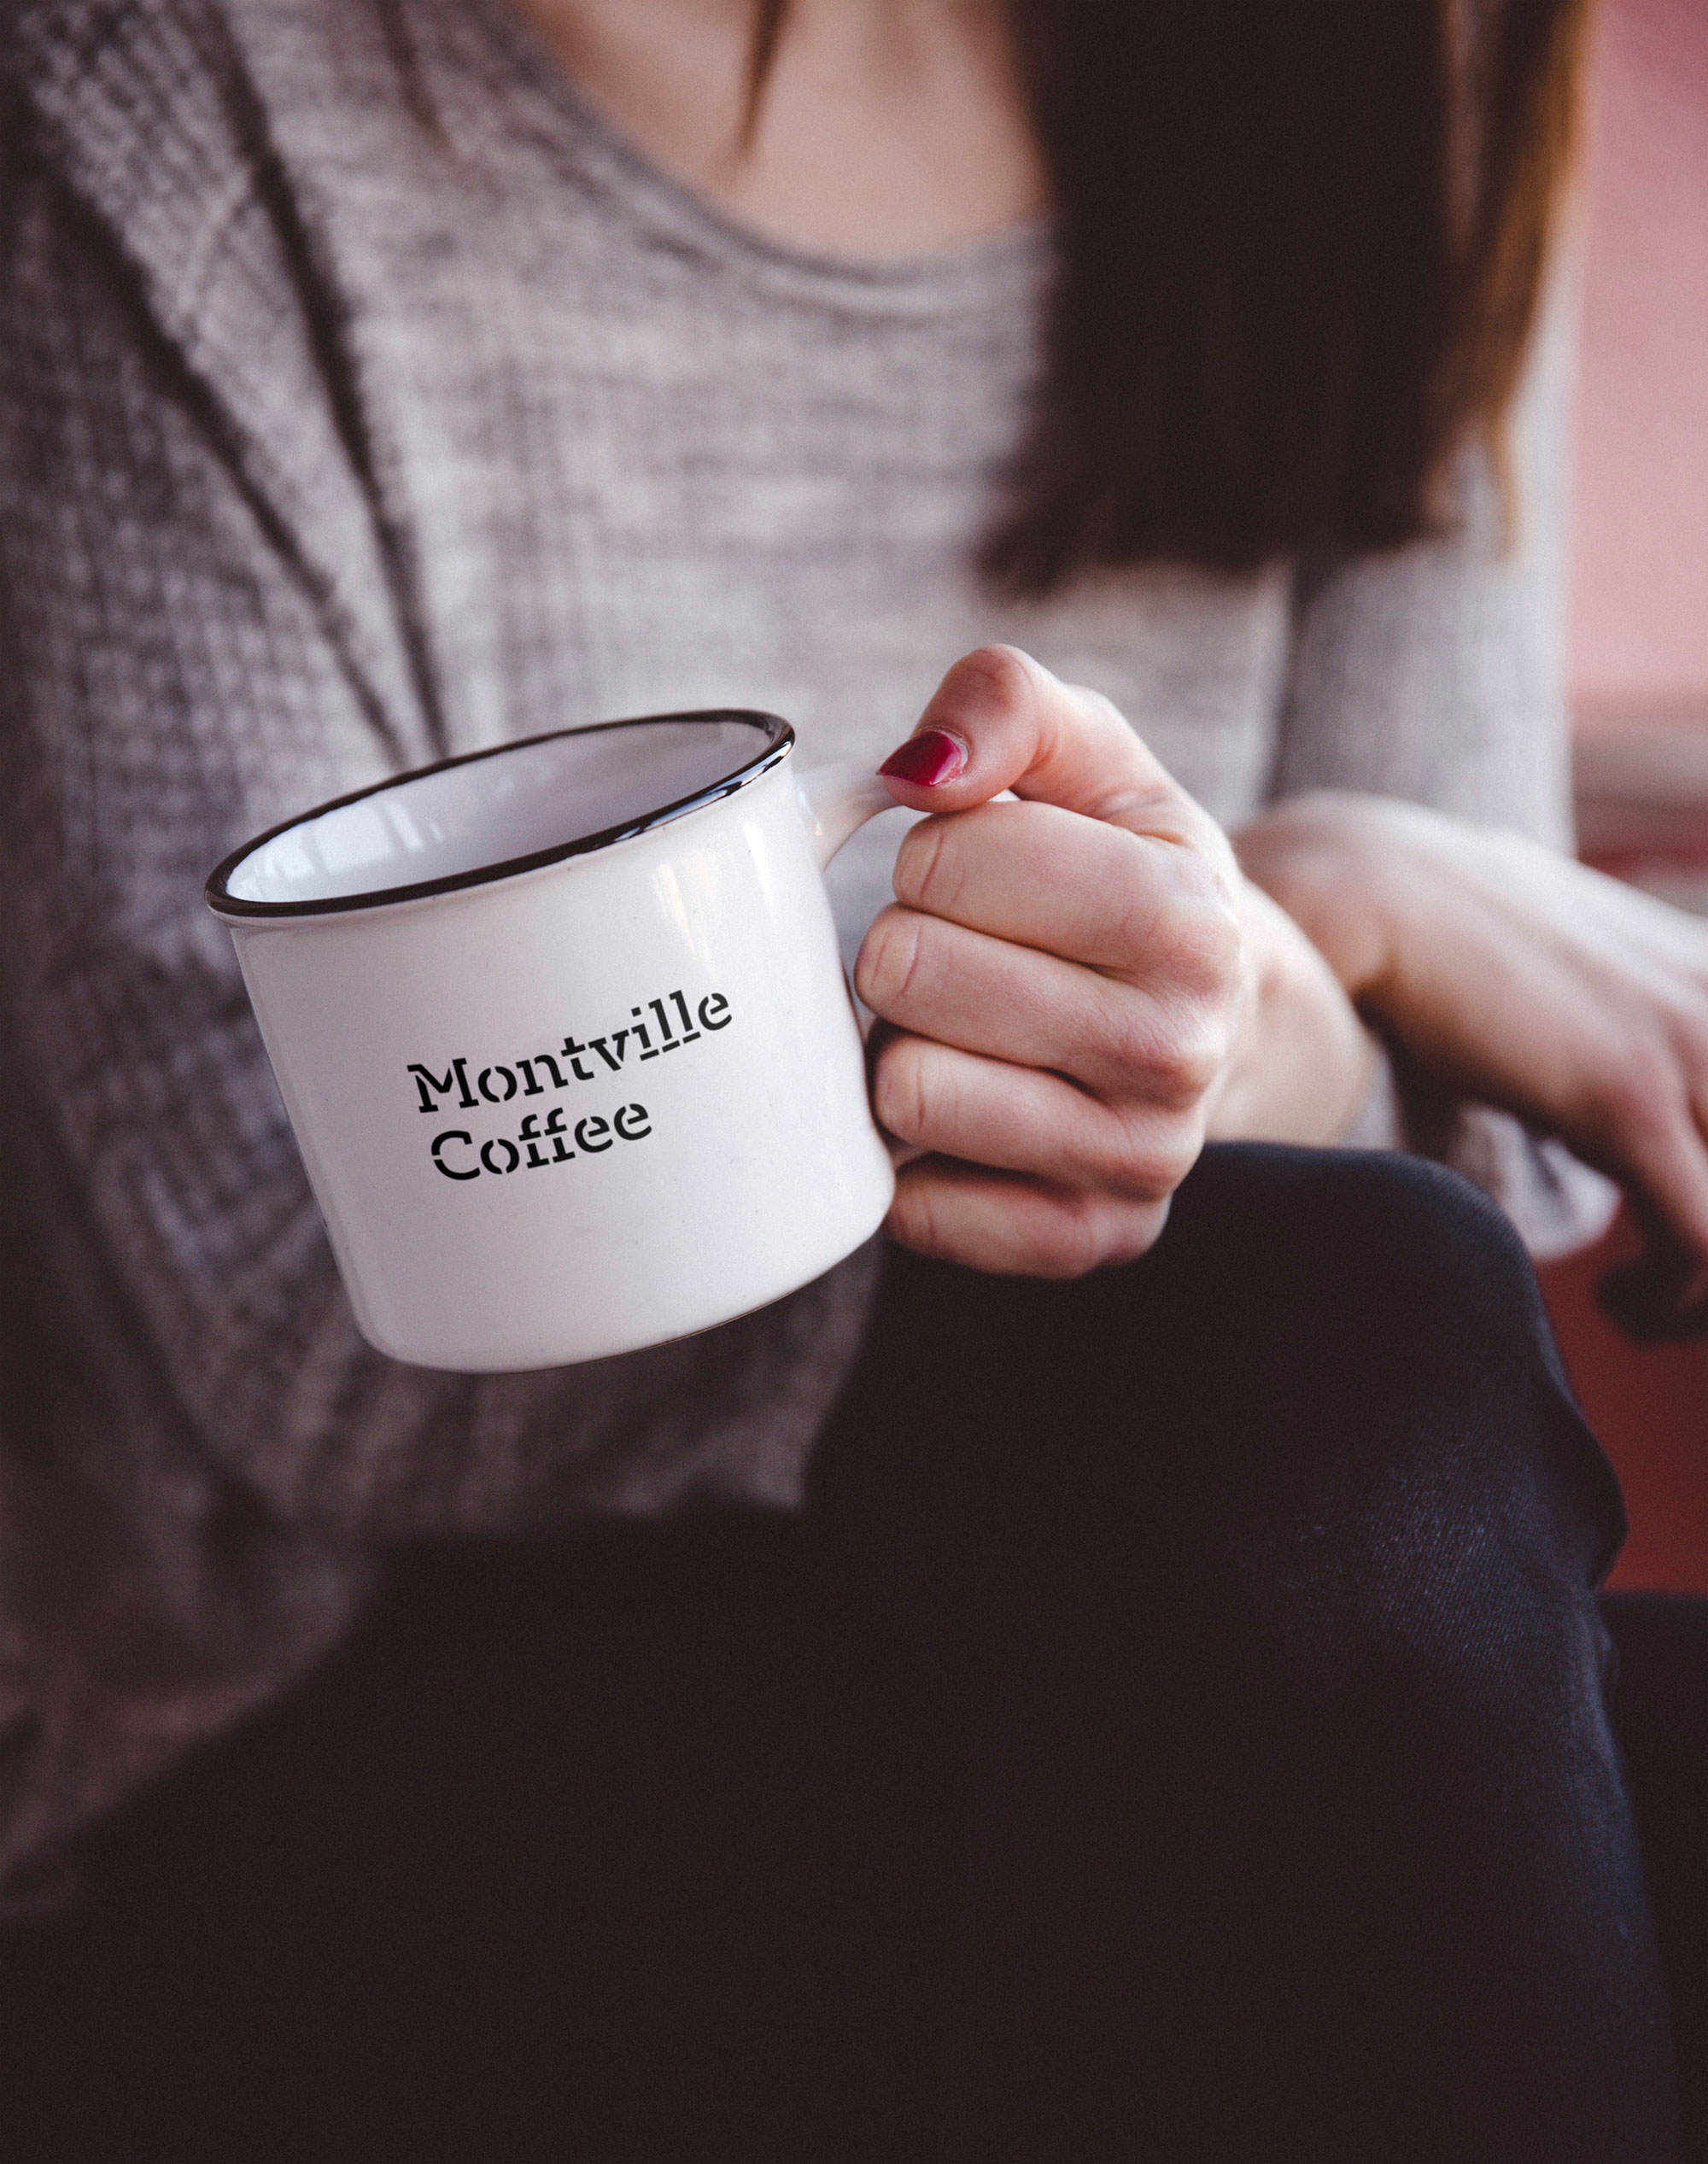 Montville Coffee mug